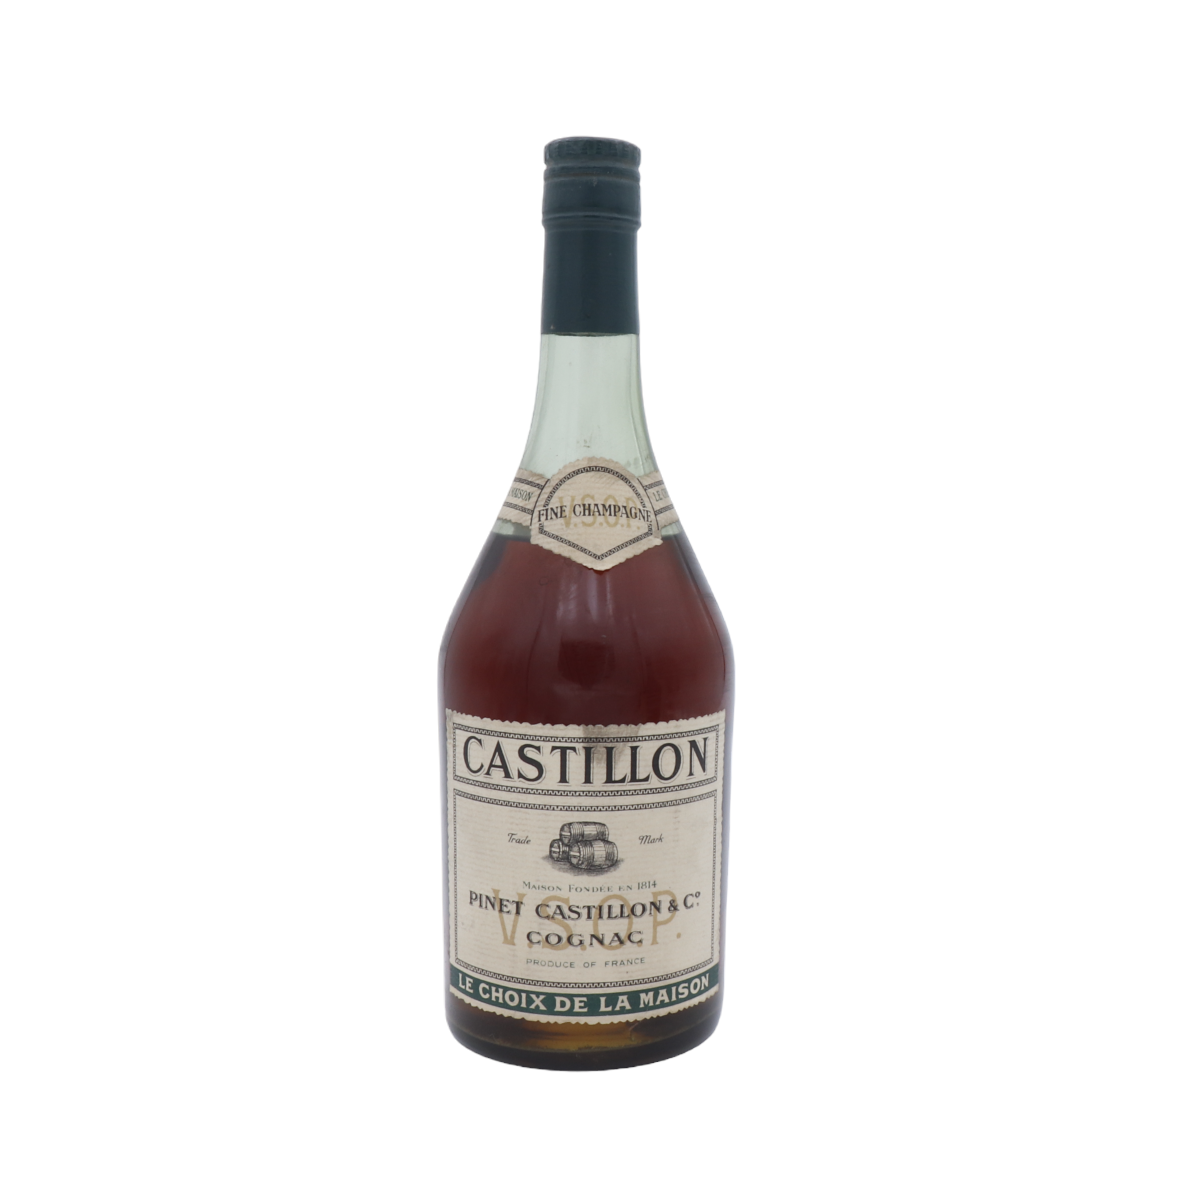 Castillon Cognac VSOP 1960 - Refined Cognac